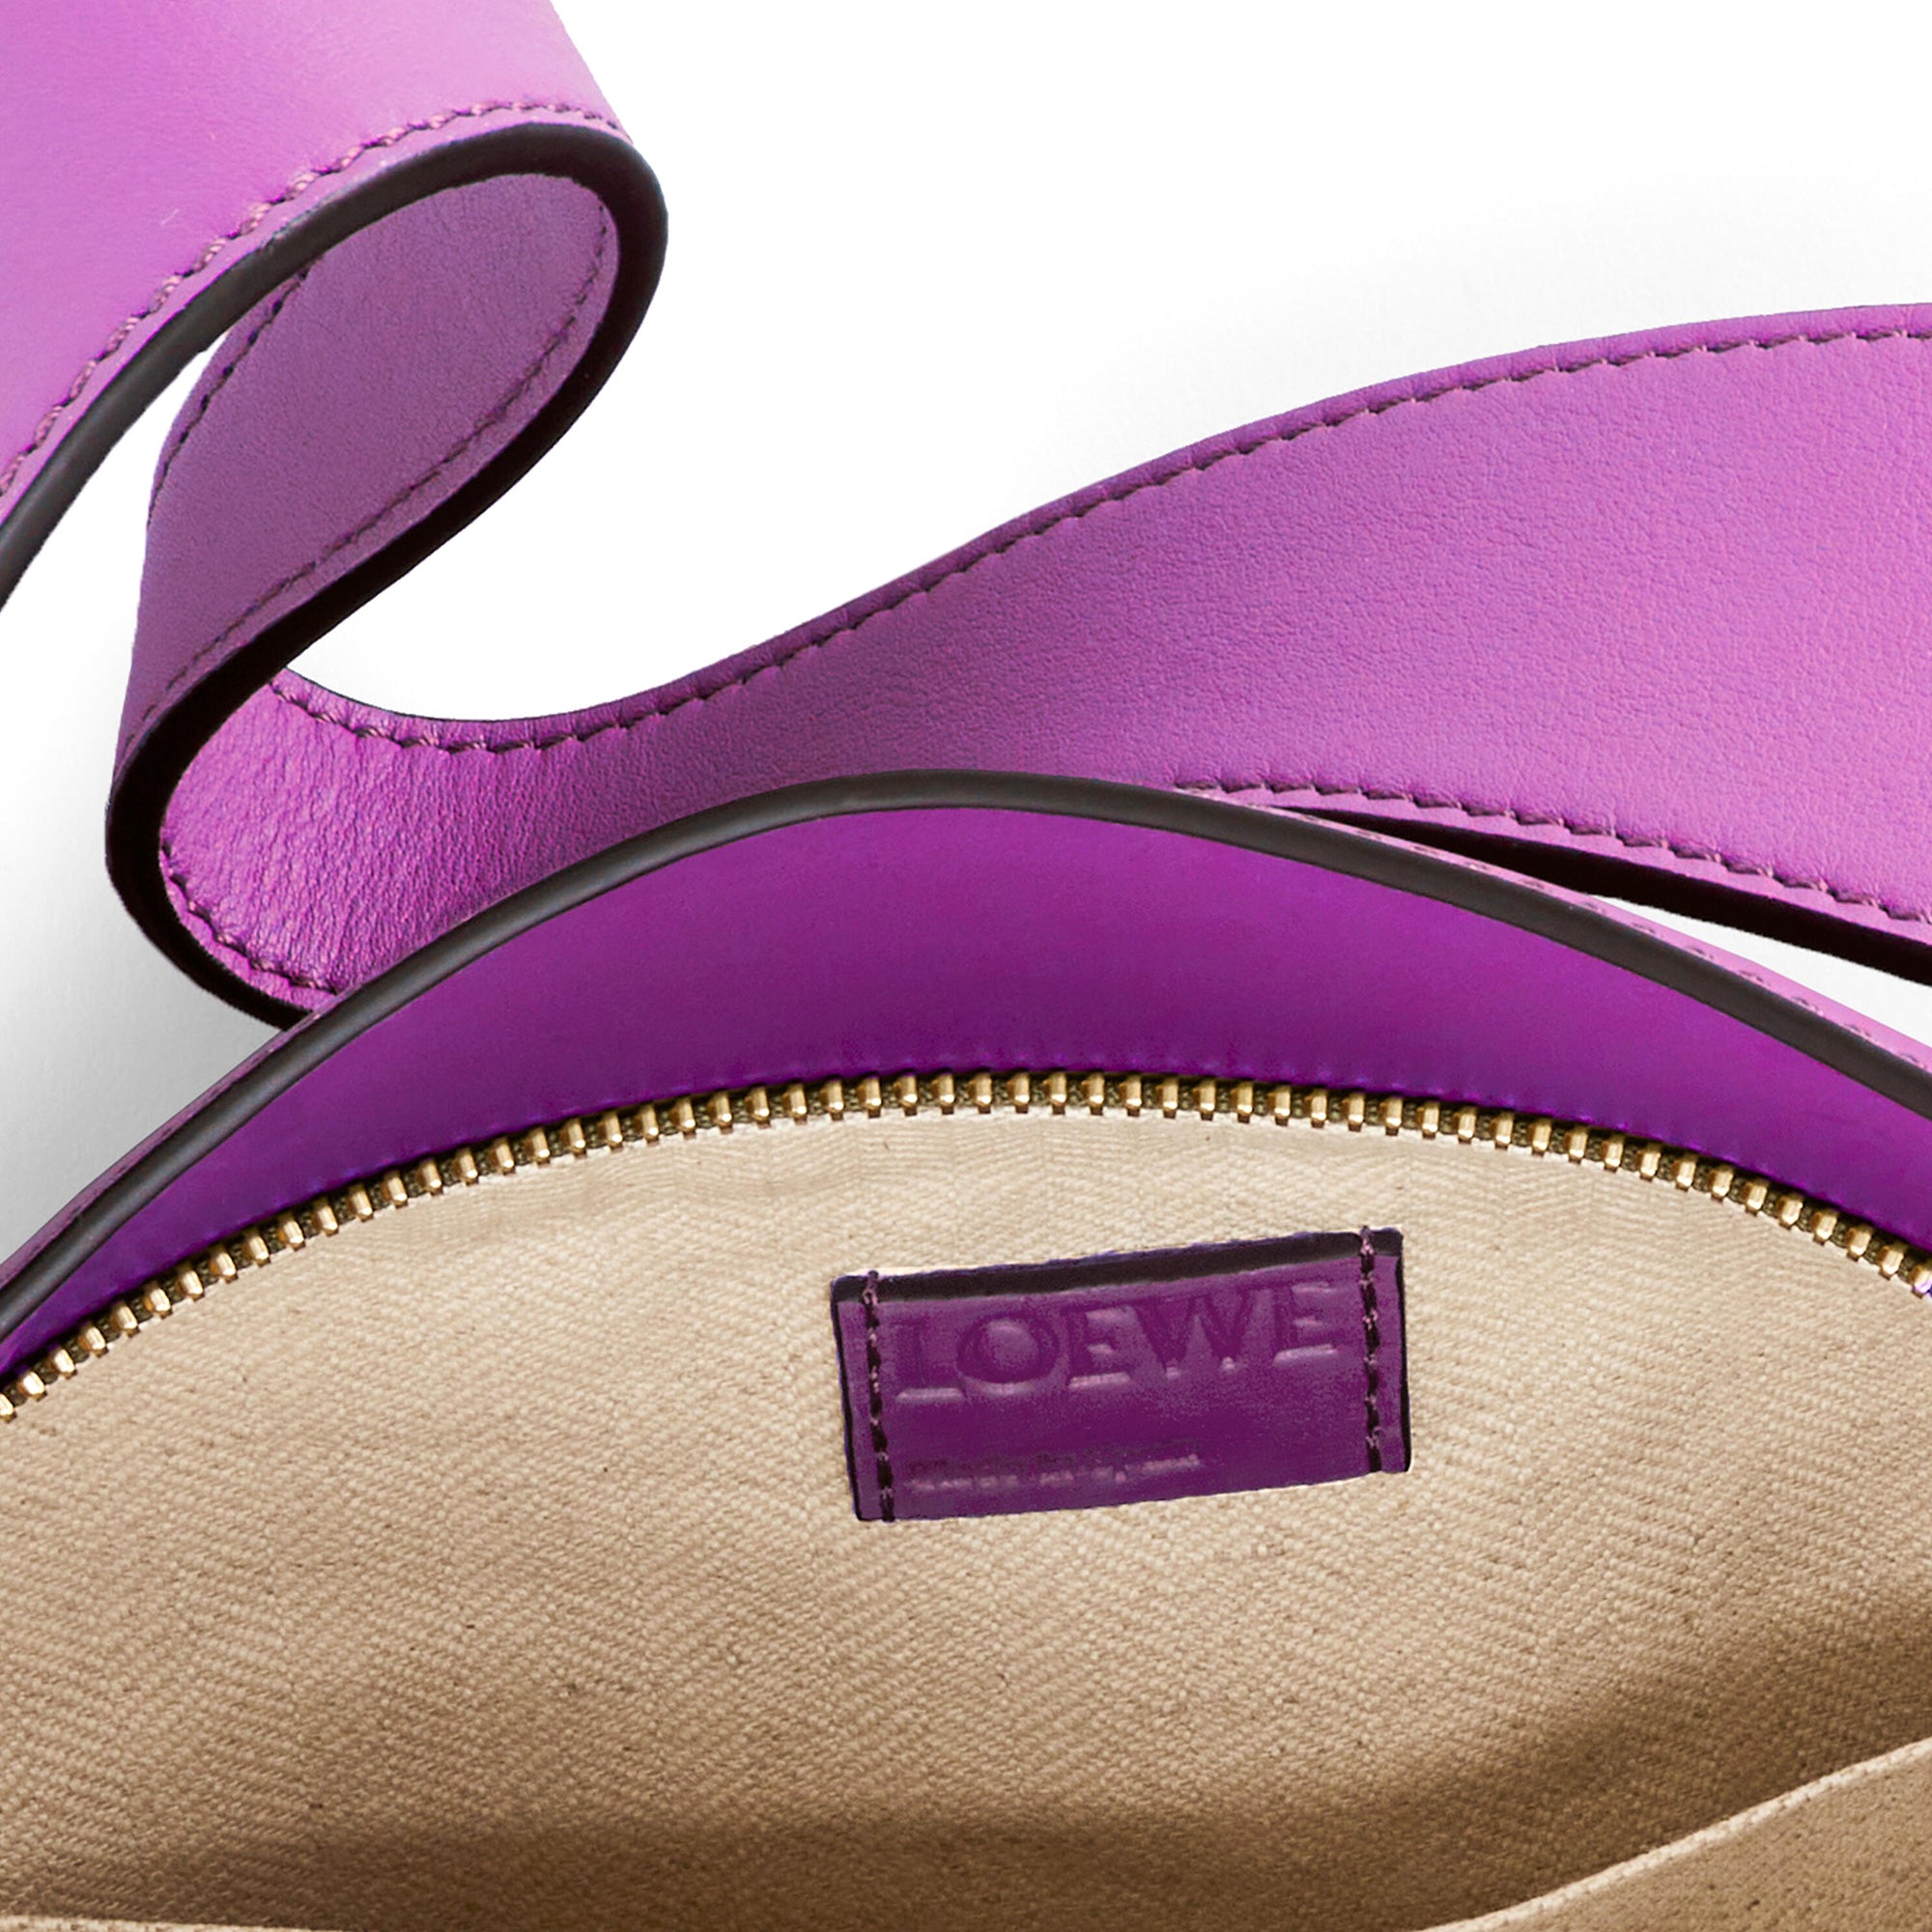 Delvaux Louise hobo bag in cardinal purple.